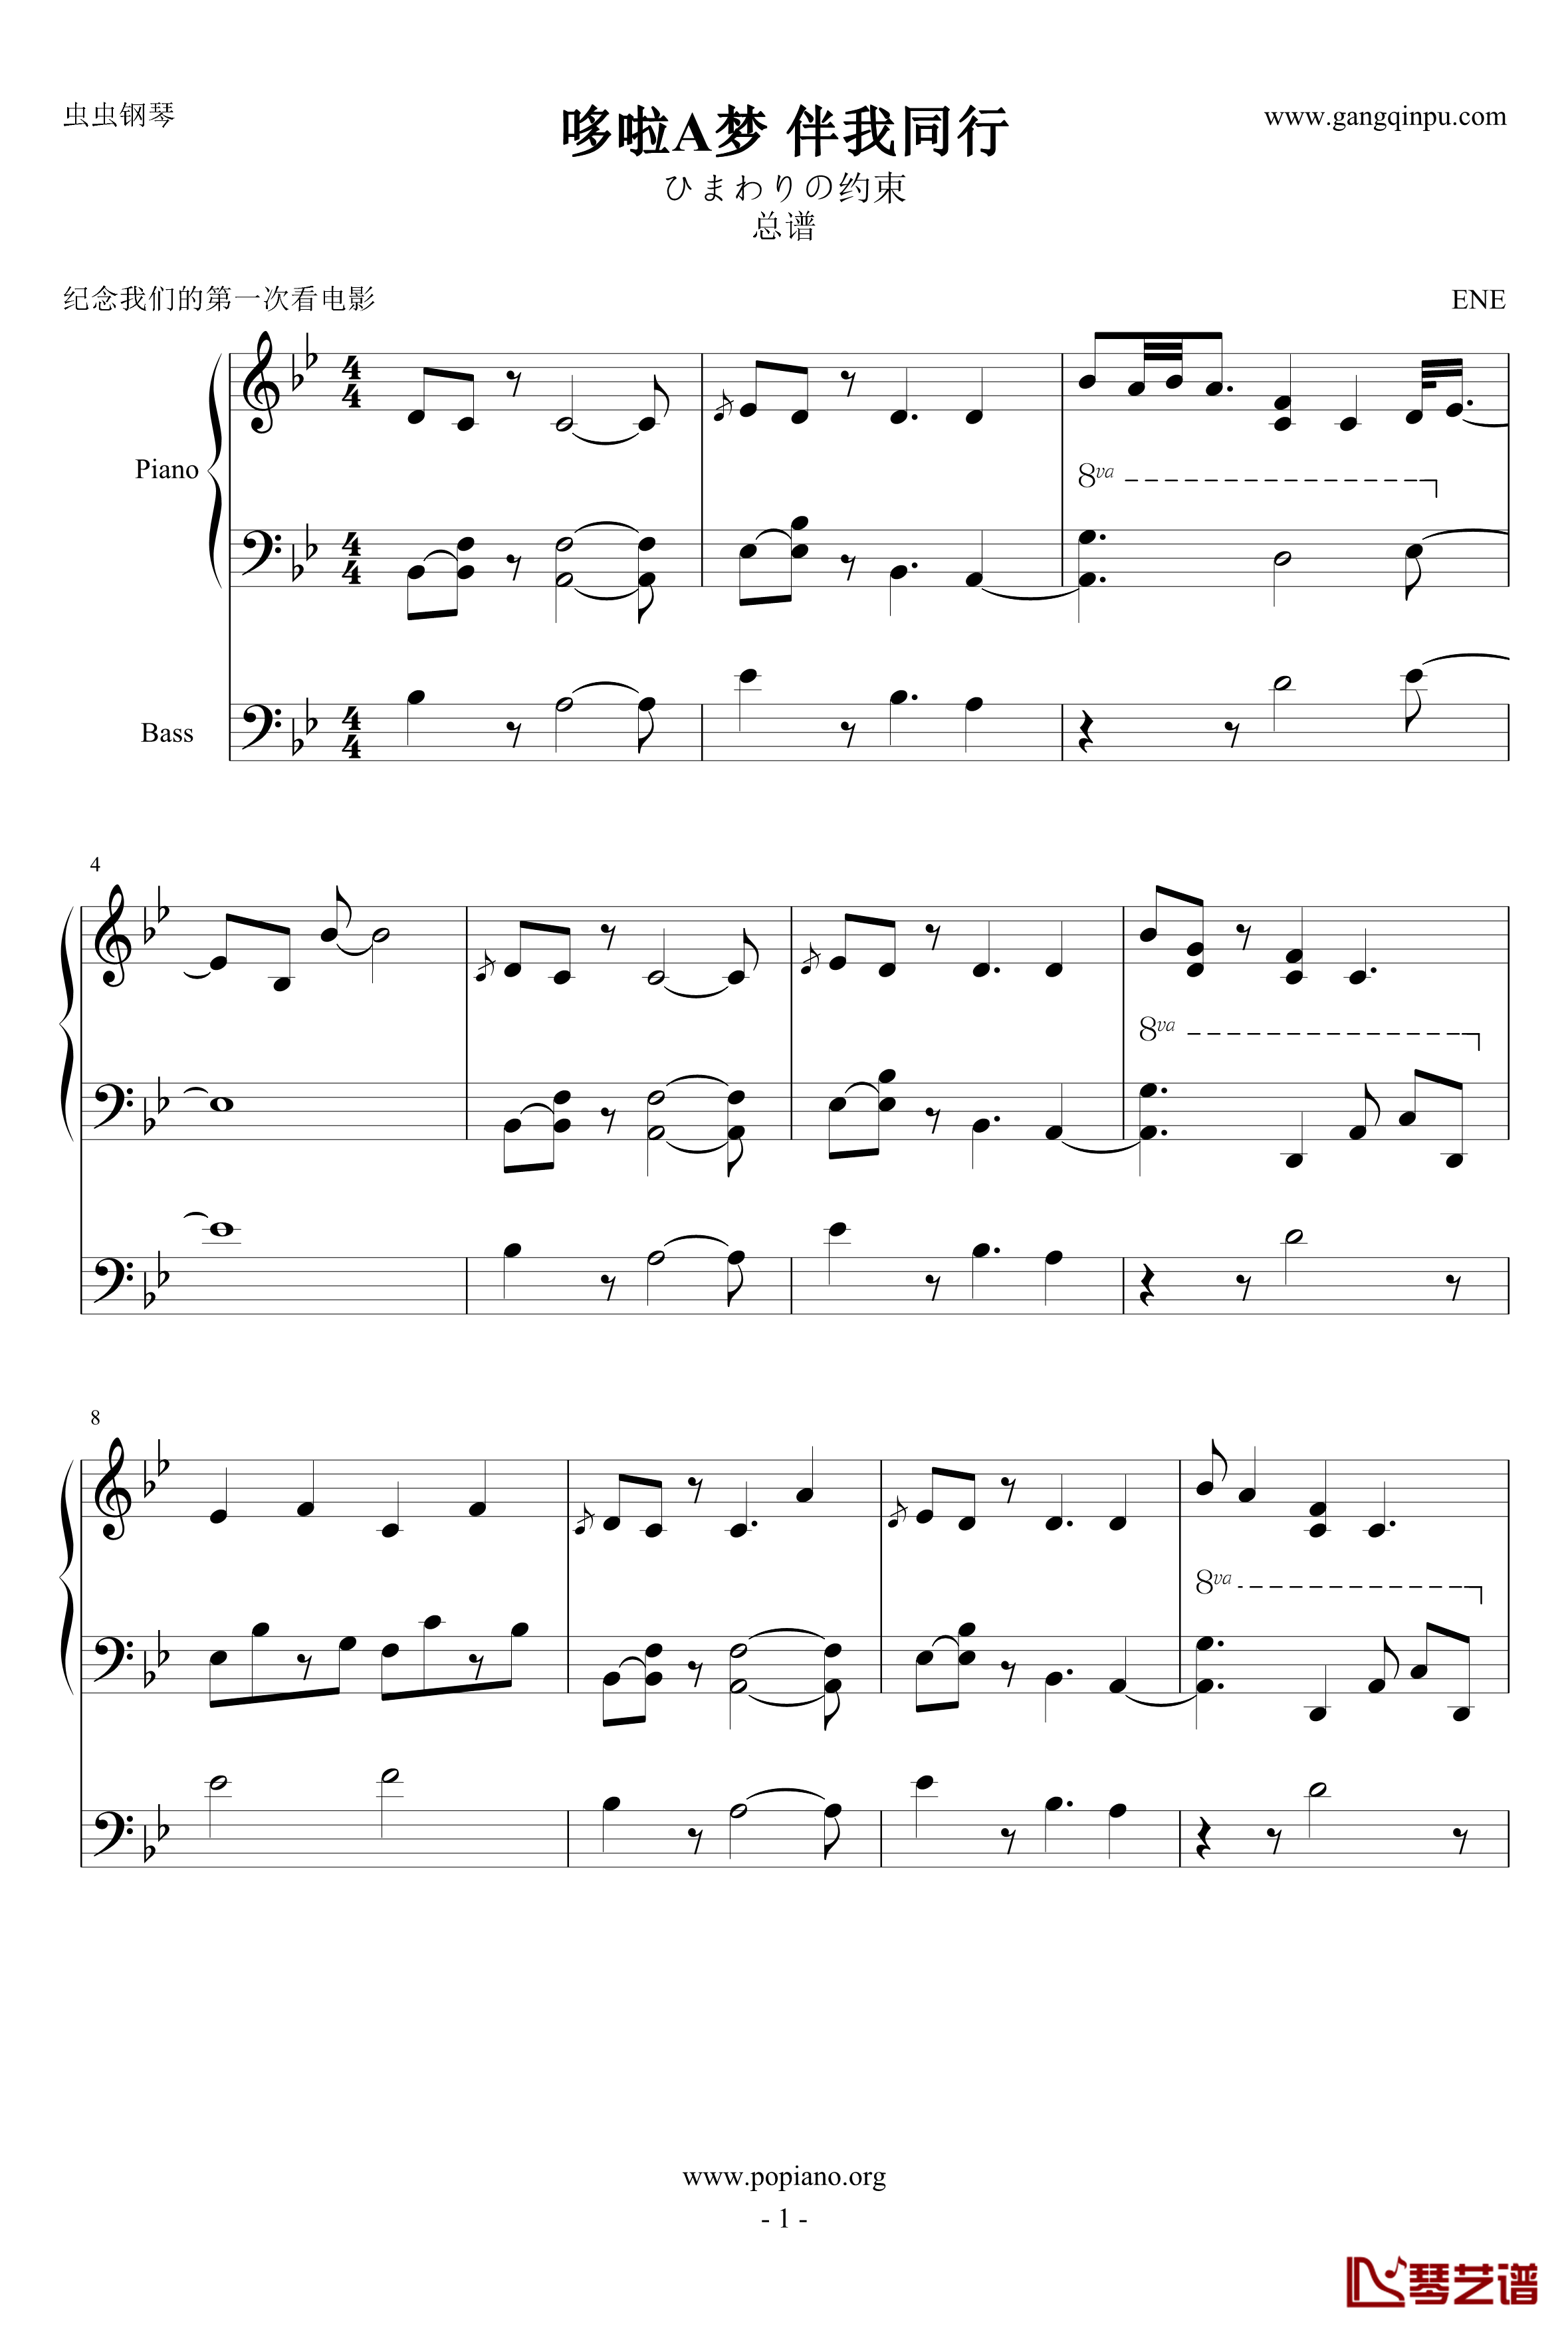 ENE钢琴谱-总谱-哆啦A梦1